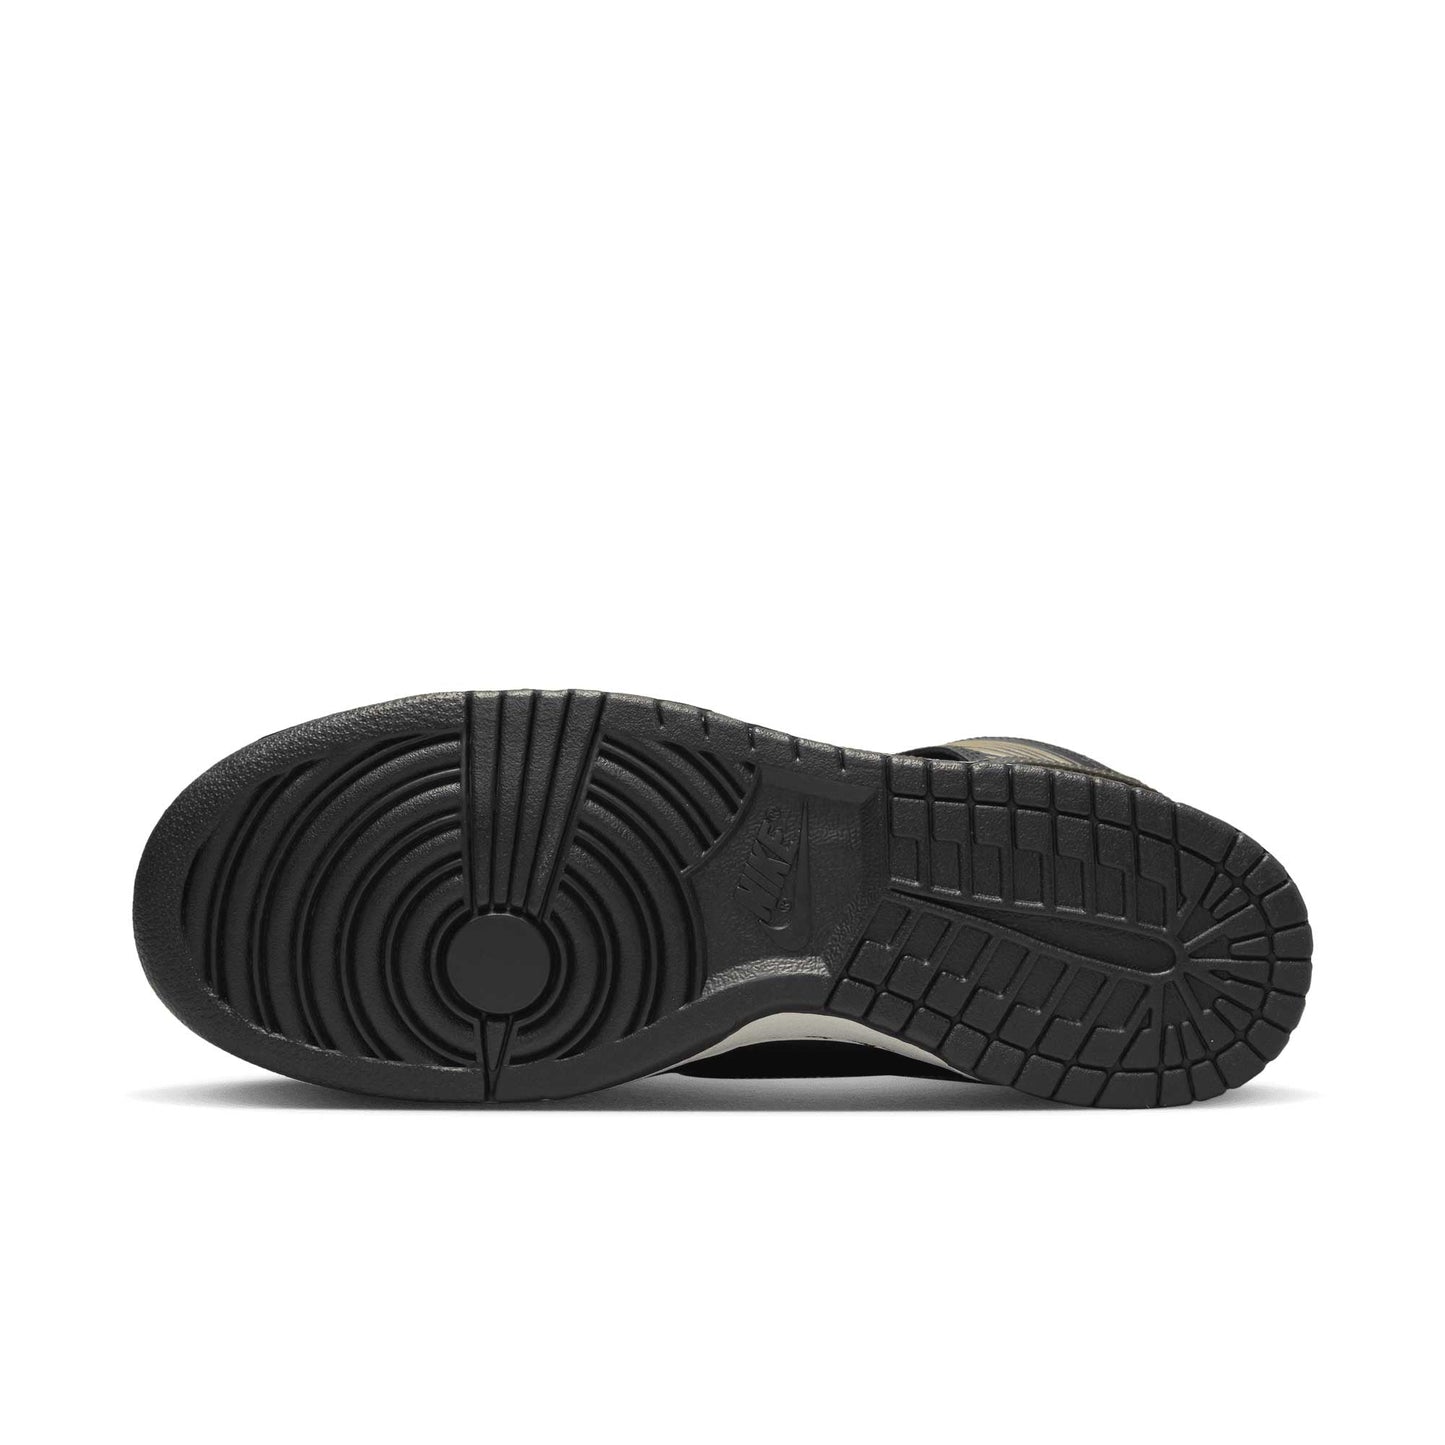 Nike SB Dunk High OG Pawnshop QS, black/black-metallic gold - Tiki Room Skateboards - 5